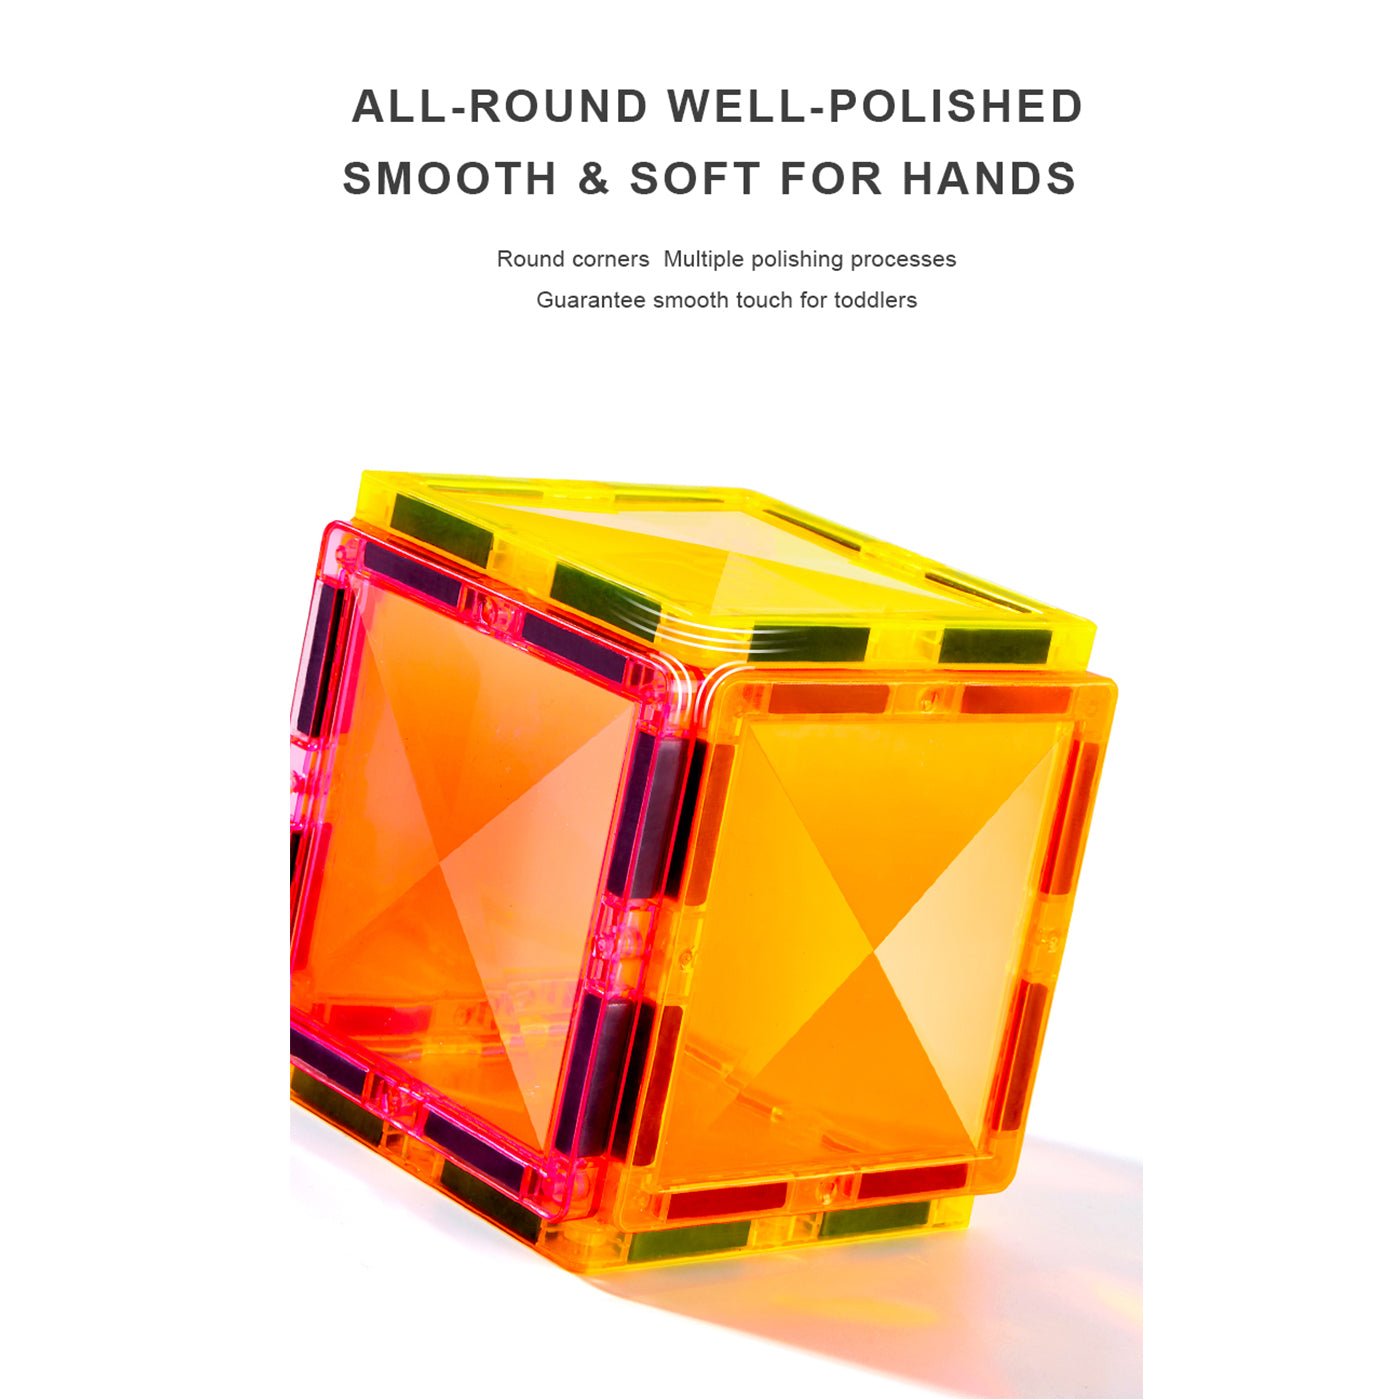 Creative Pack 60pcs Rainbow Magnetic Tiles - 0cm